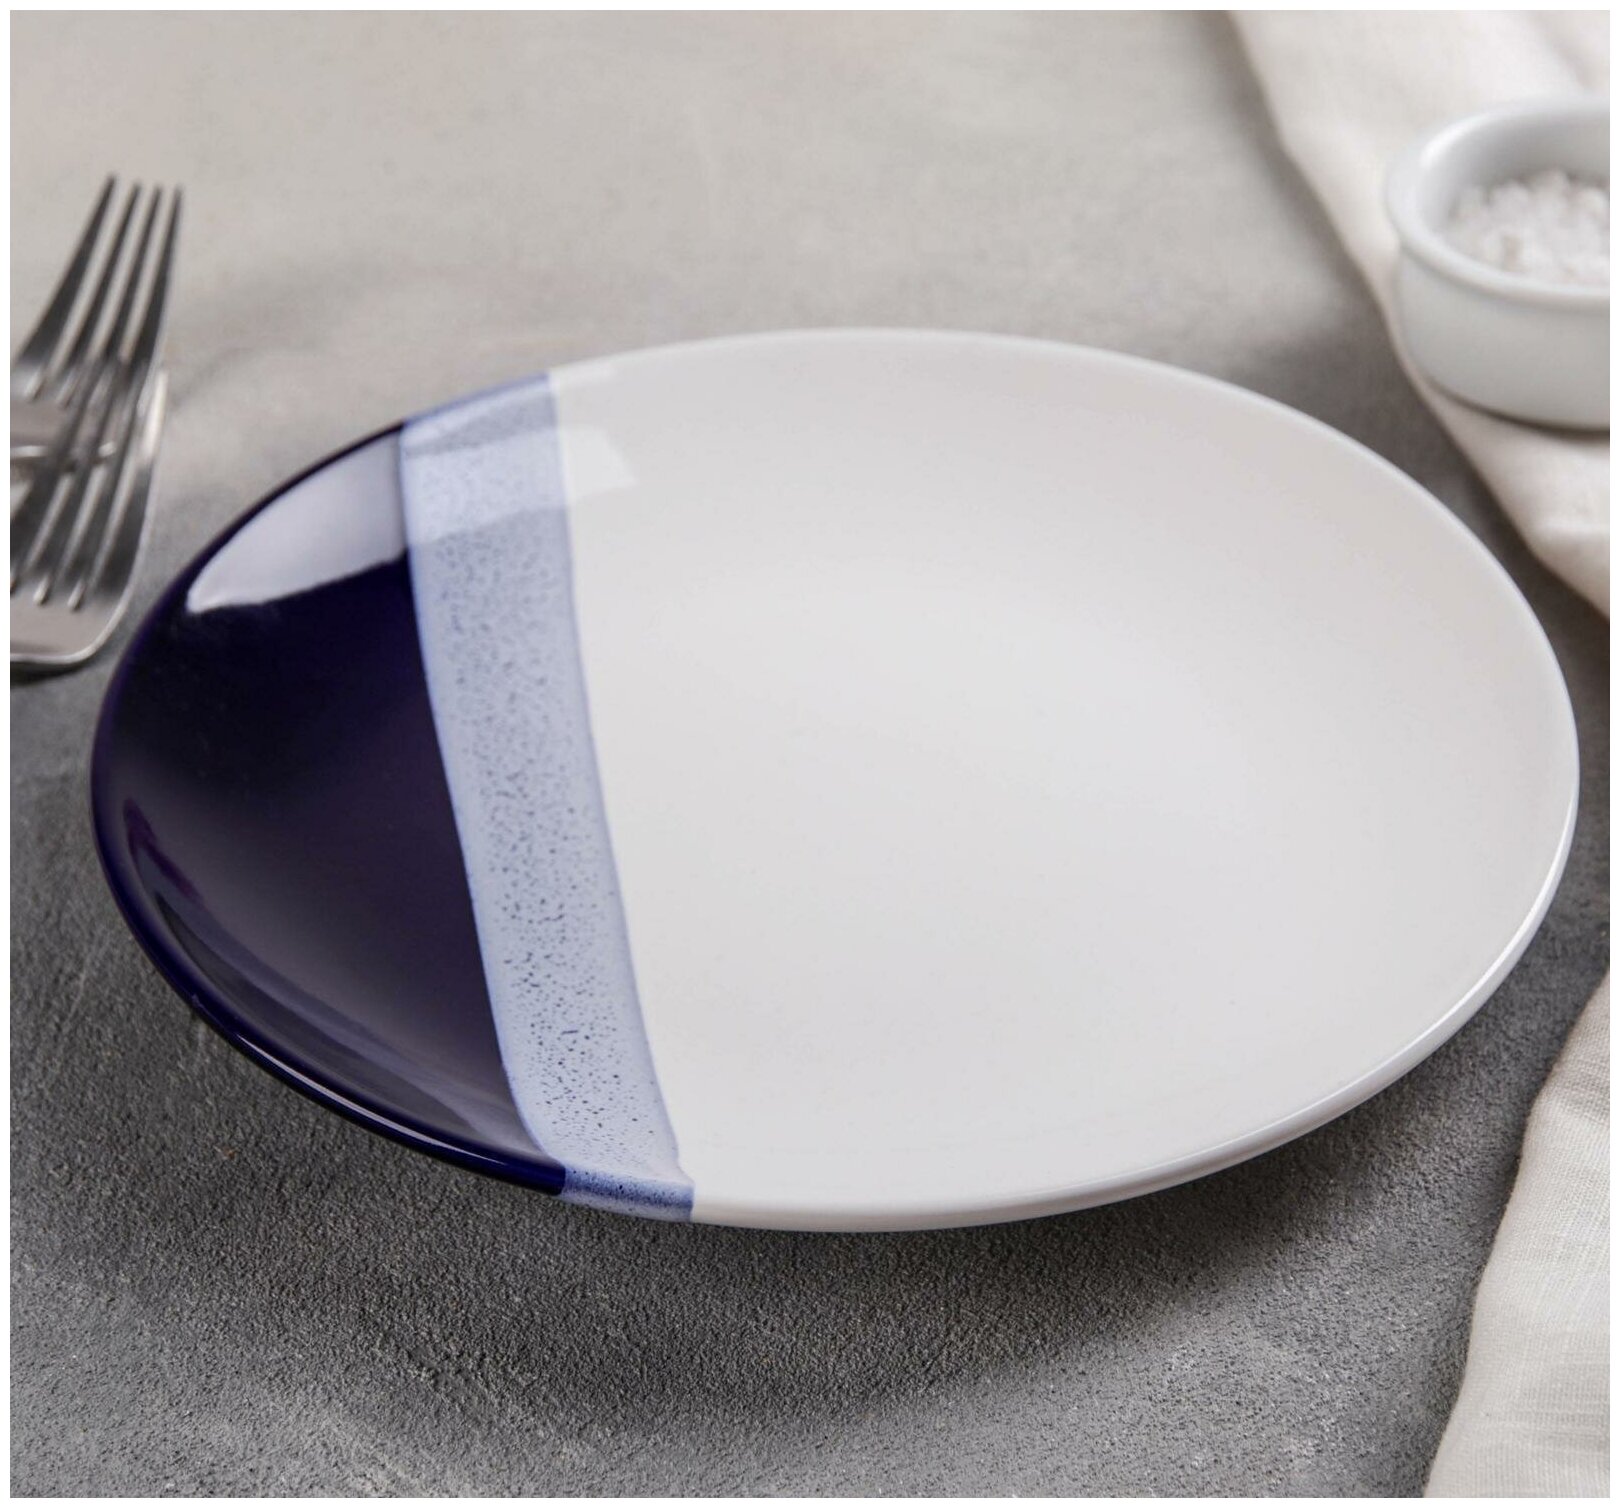 Тарелка белая с синими полосками Кубаньфарфор, 1 шт, керамика, диаметр 21 см